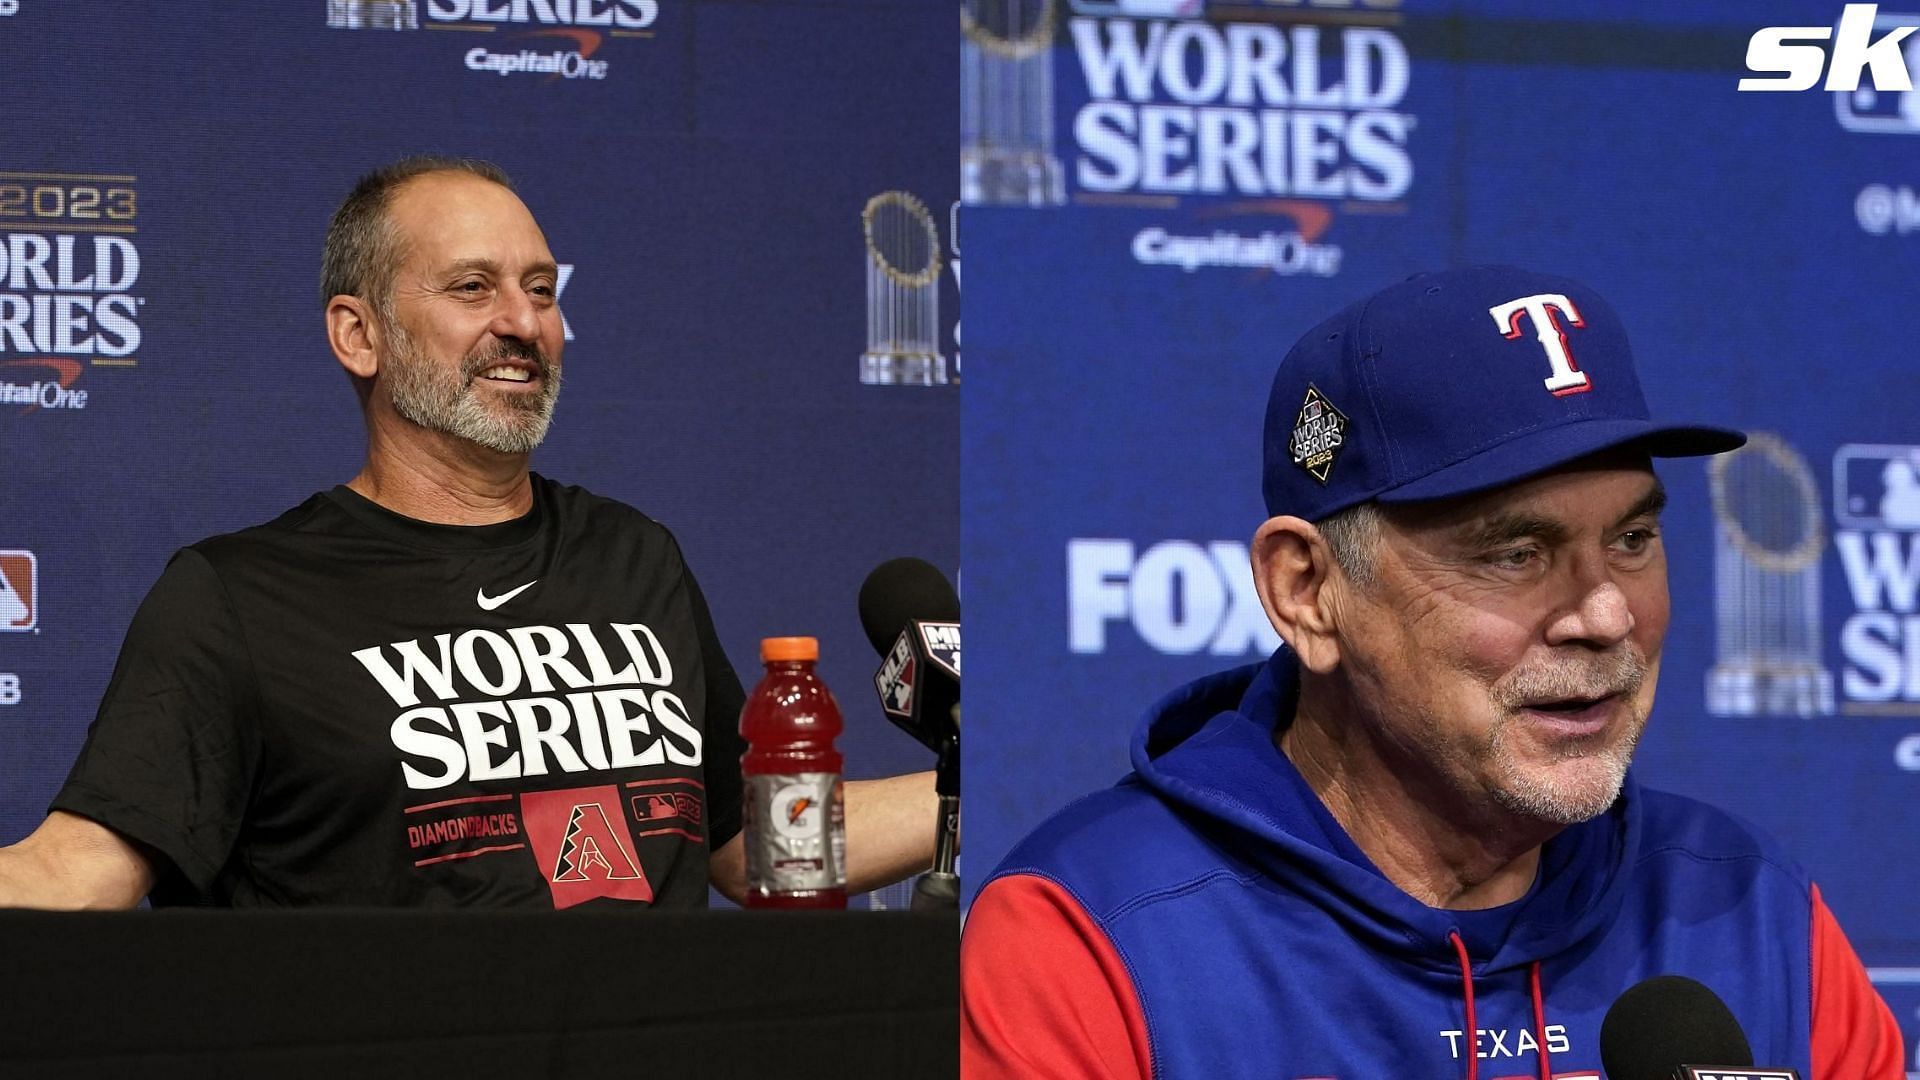 Torey Lovullo appreciates veteran opponents Bruce Bochy ahead of World Series showdown